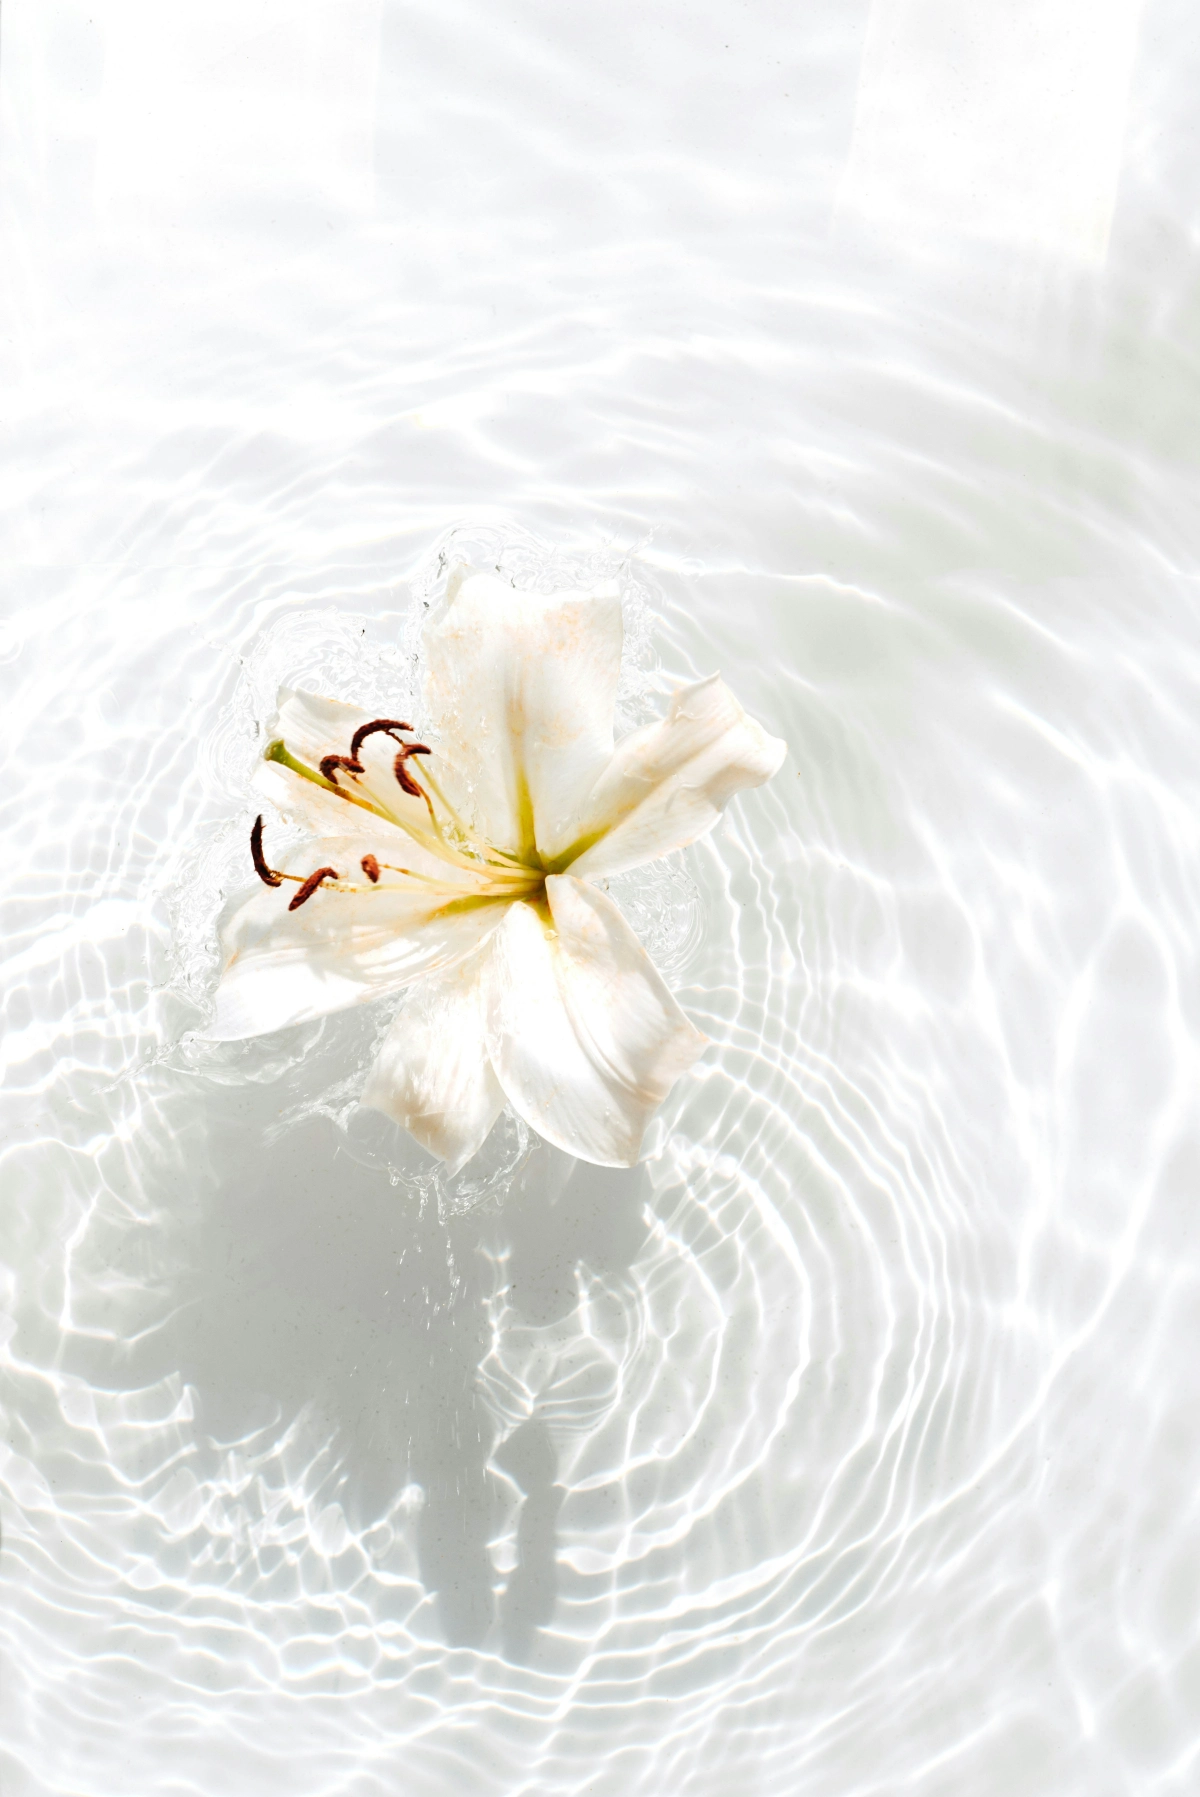 surface eau reflets rayons soleil lys blanc fleur wallpaper zen